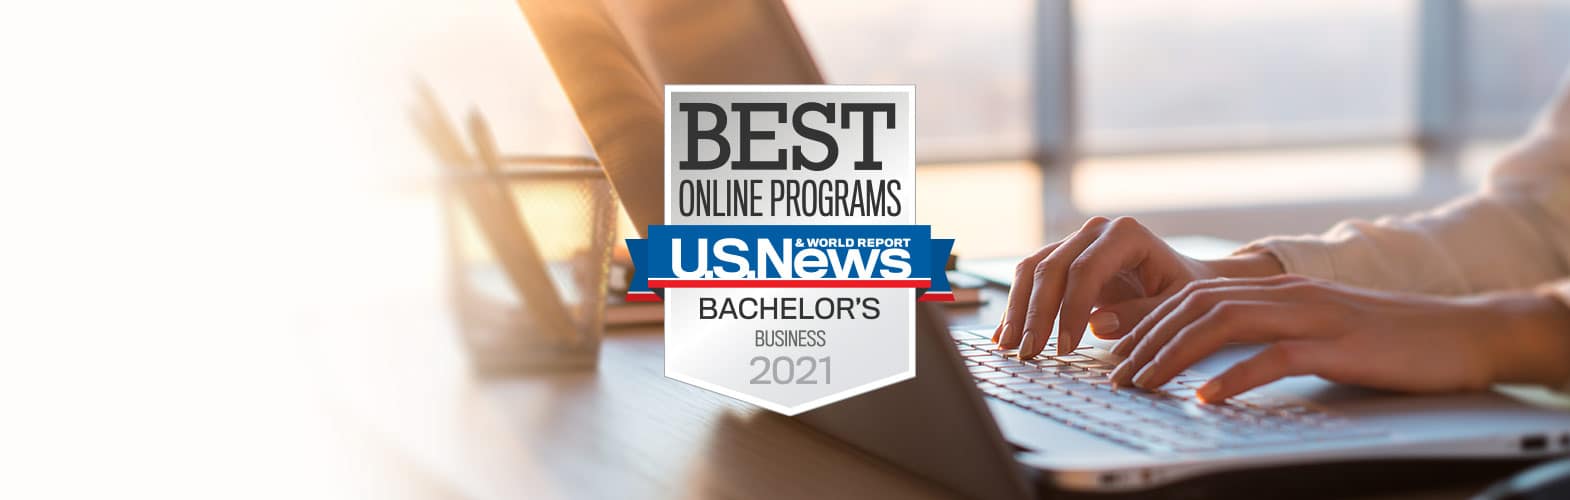 U.S. News & World Report Best Online Programs, Bachelors Business 2021